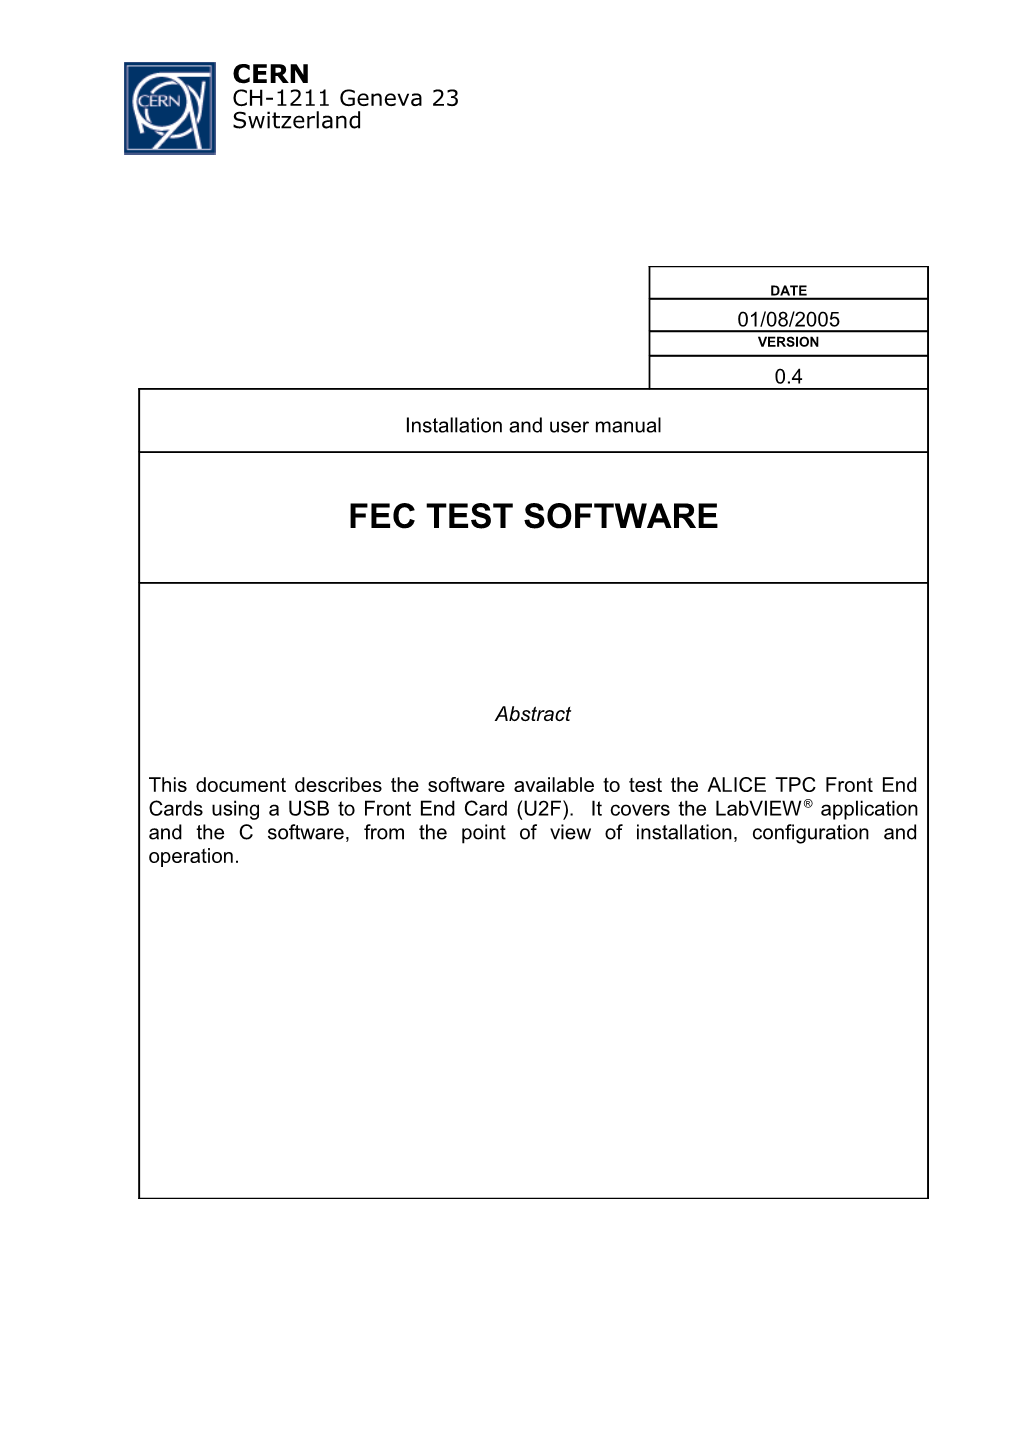 Fec Test Program Based in U2f